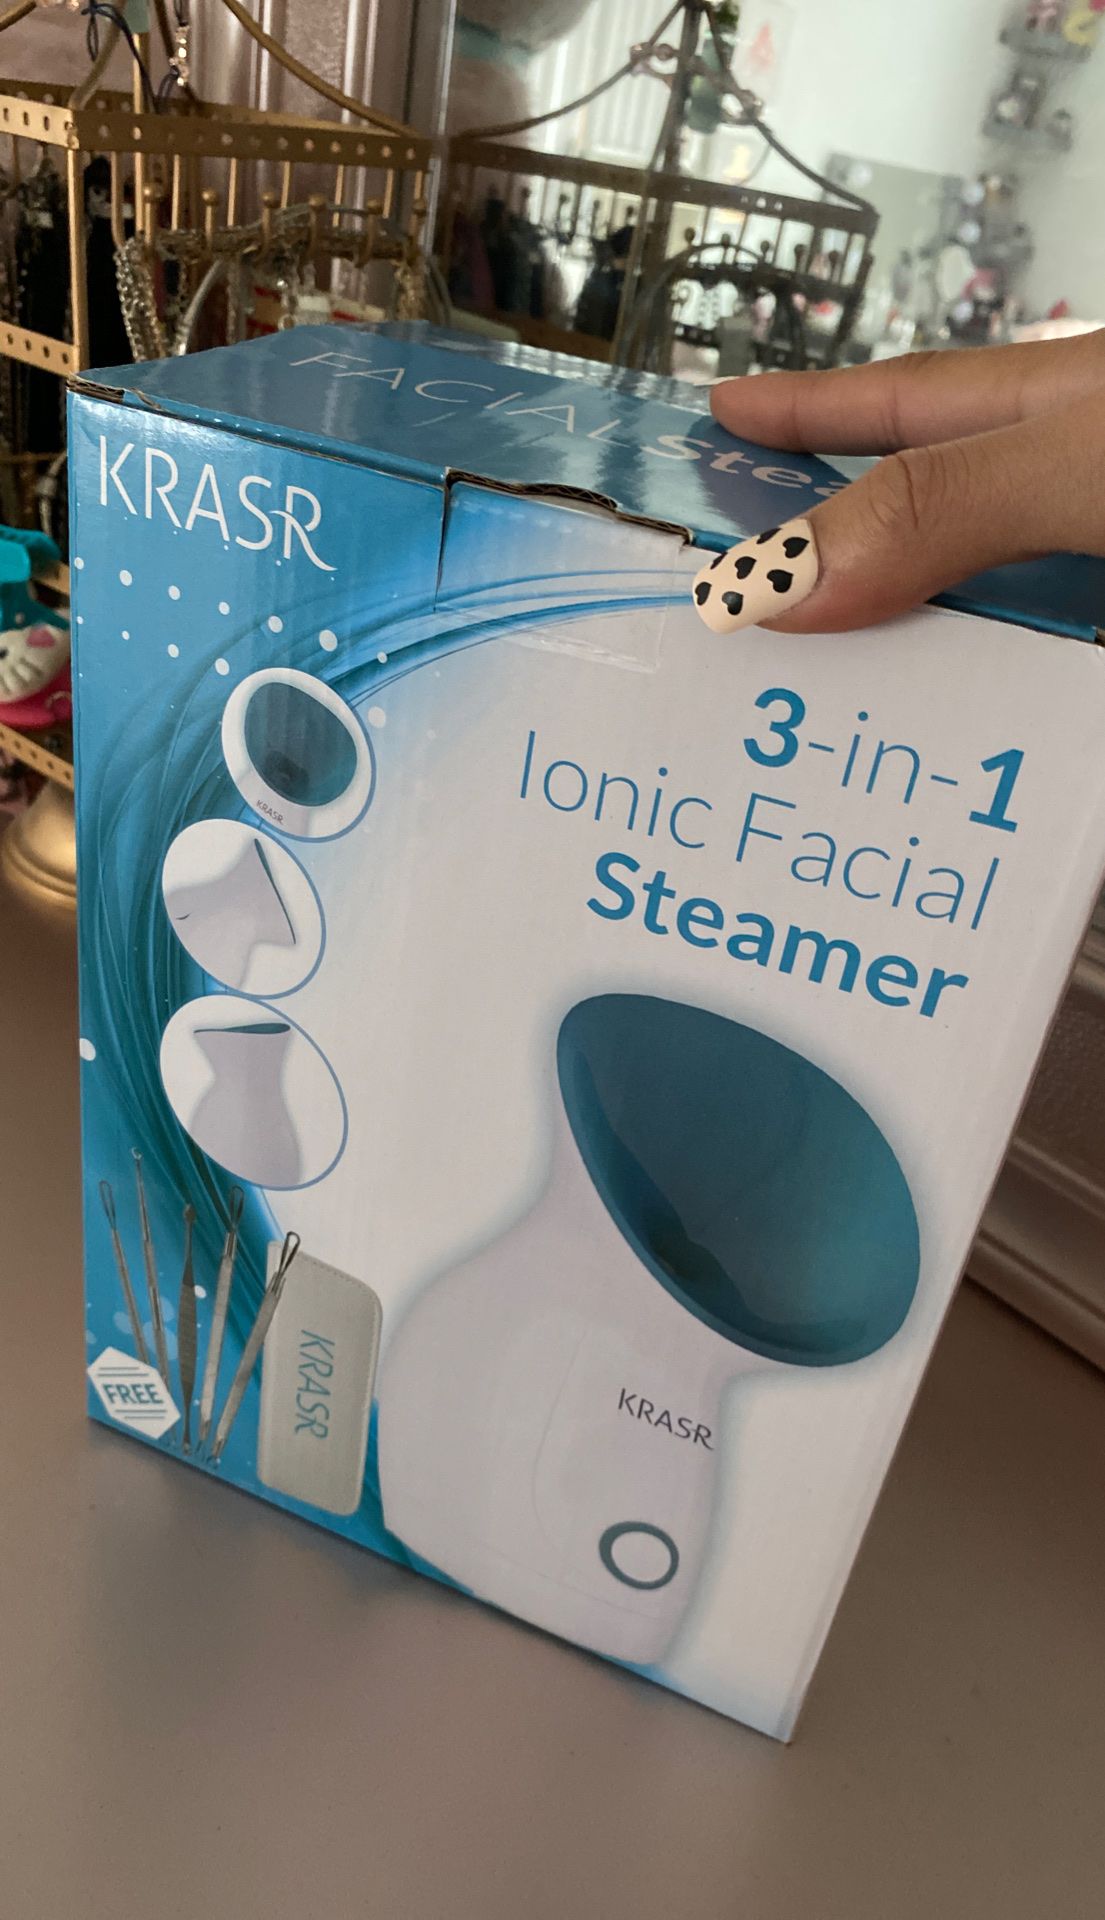 Krasr 3-in-1 Ionic Facial Steamer (NEW)